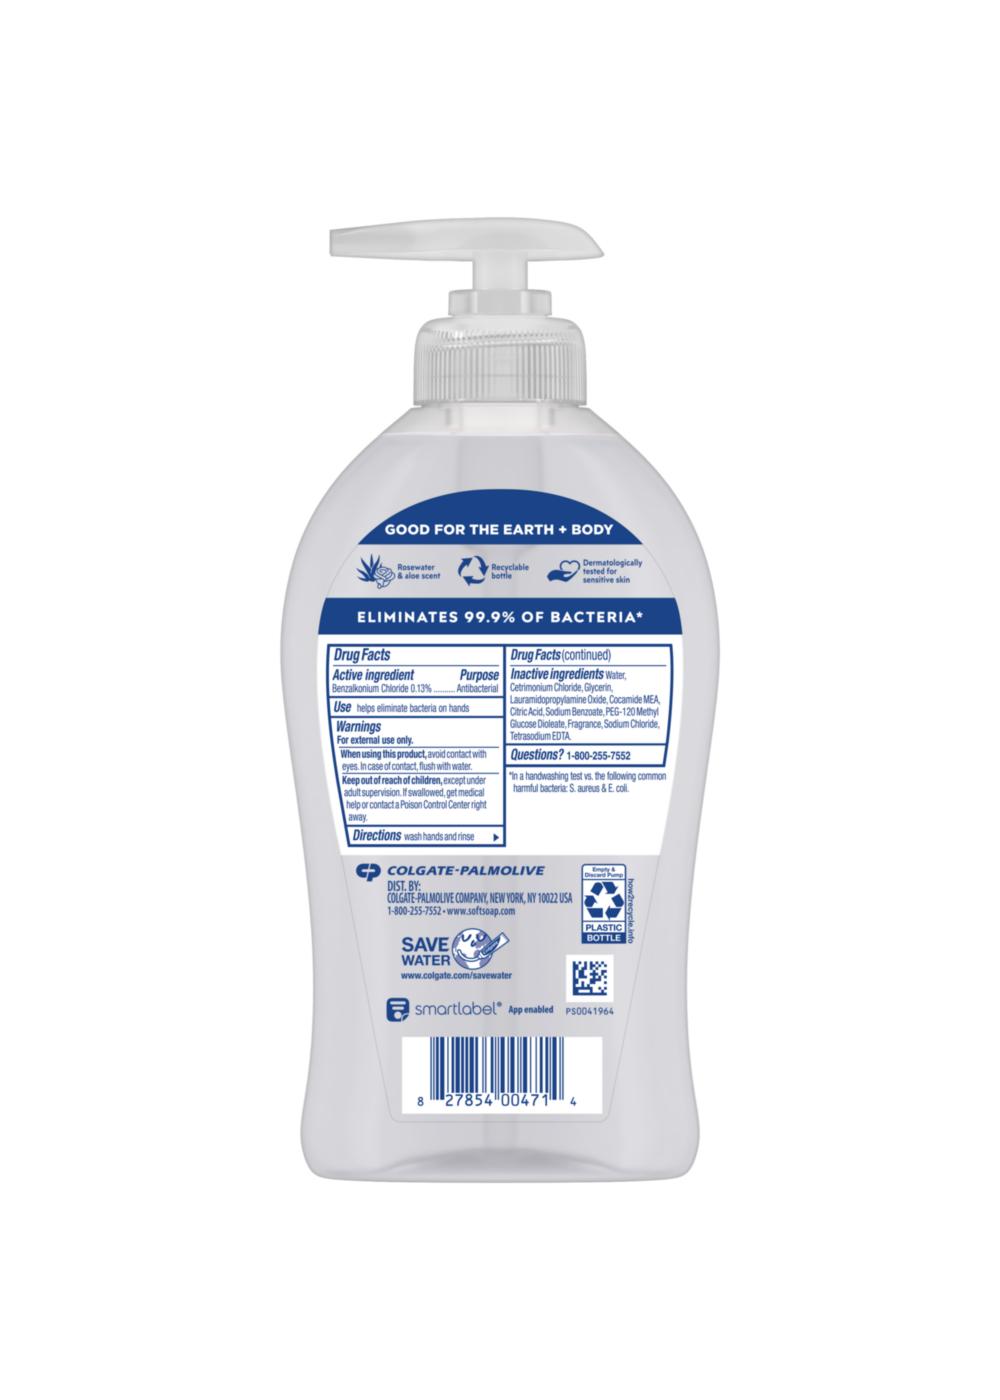 Softsoap Antibacterial Hand Soap - Rosewater & Aloe; image 2 of 2